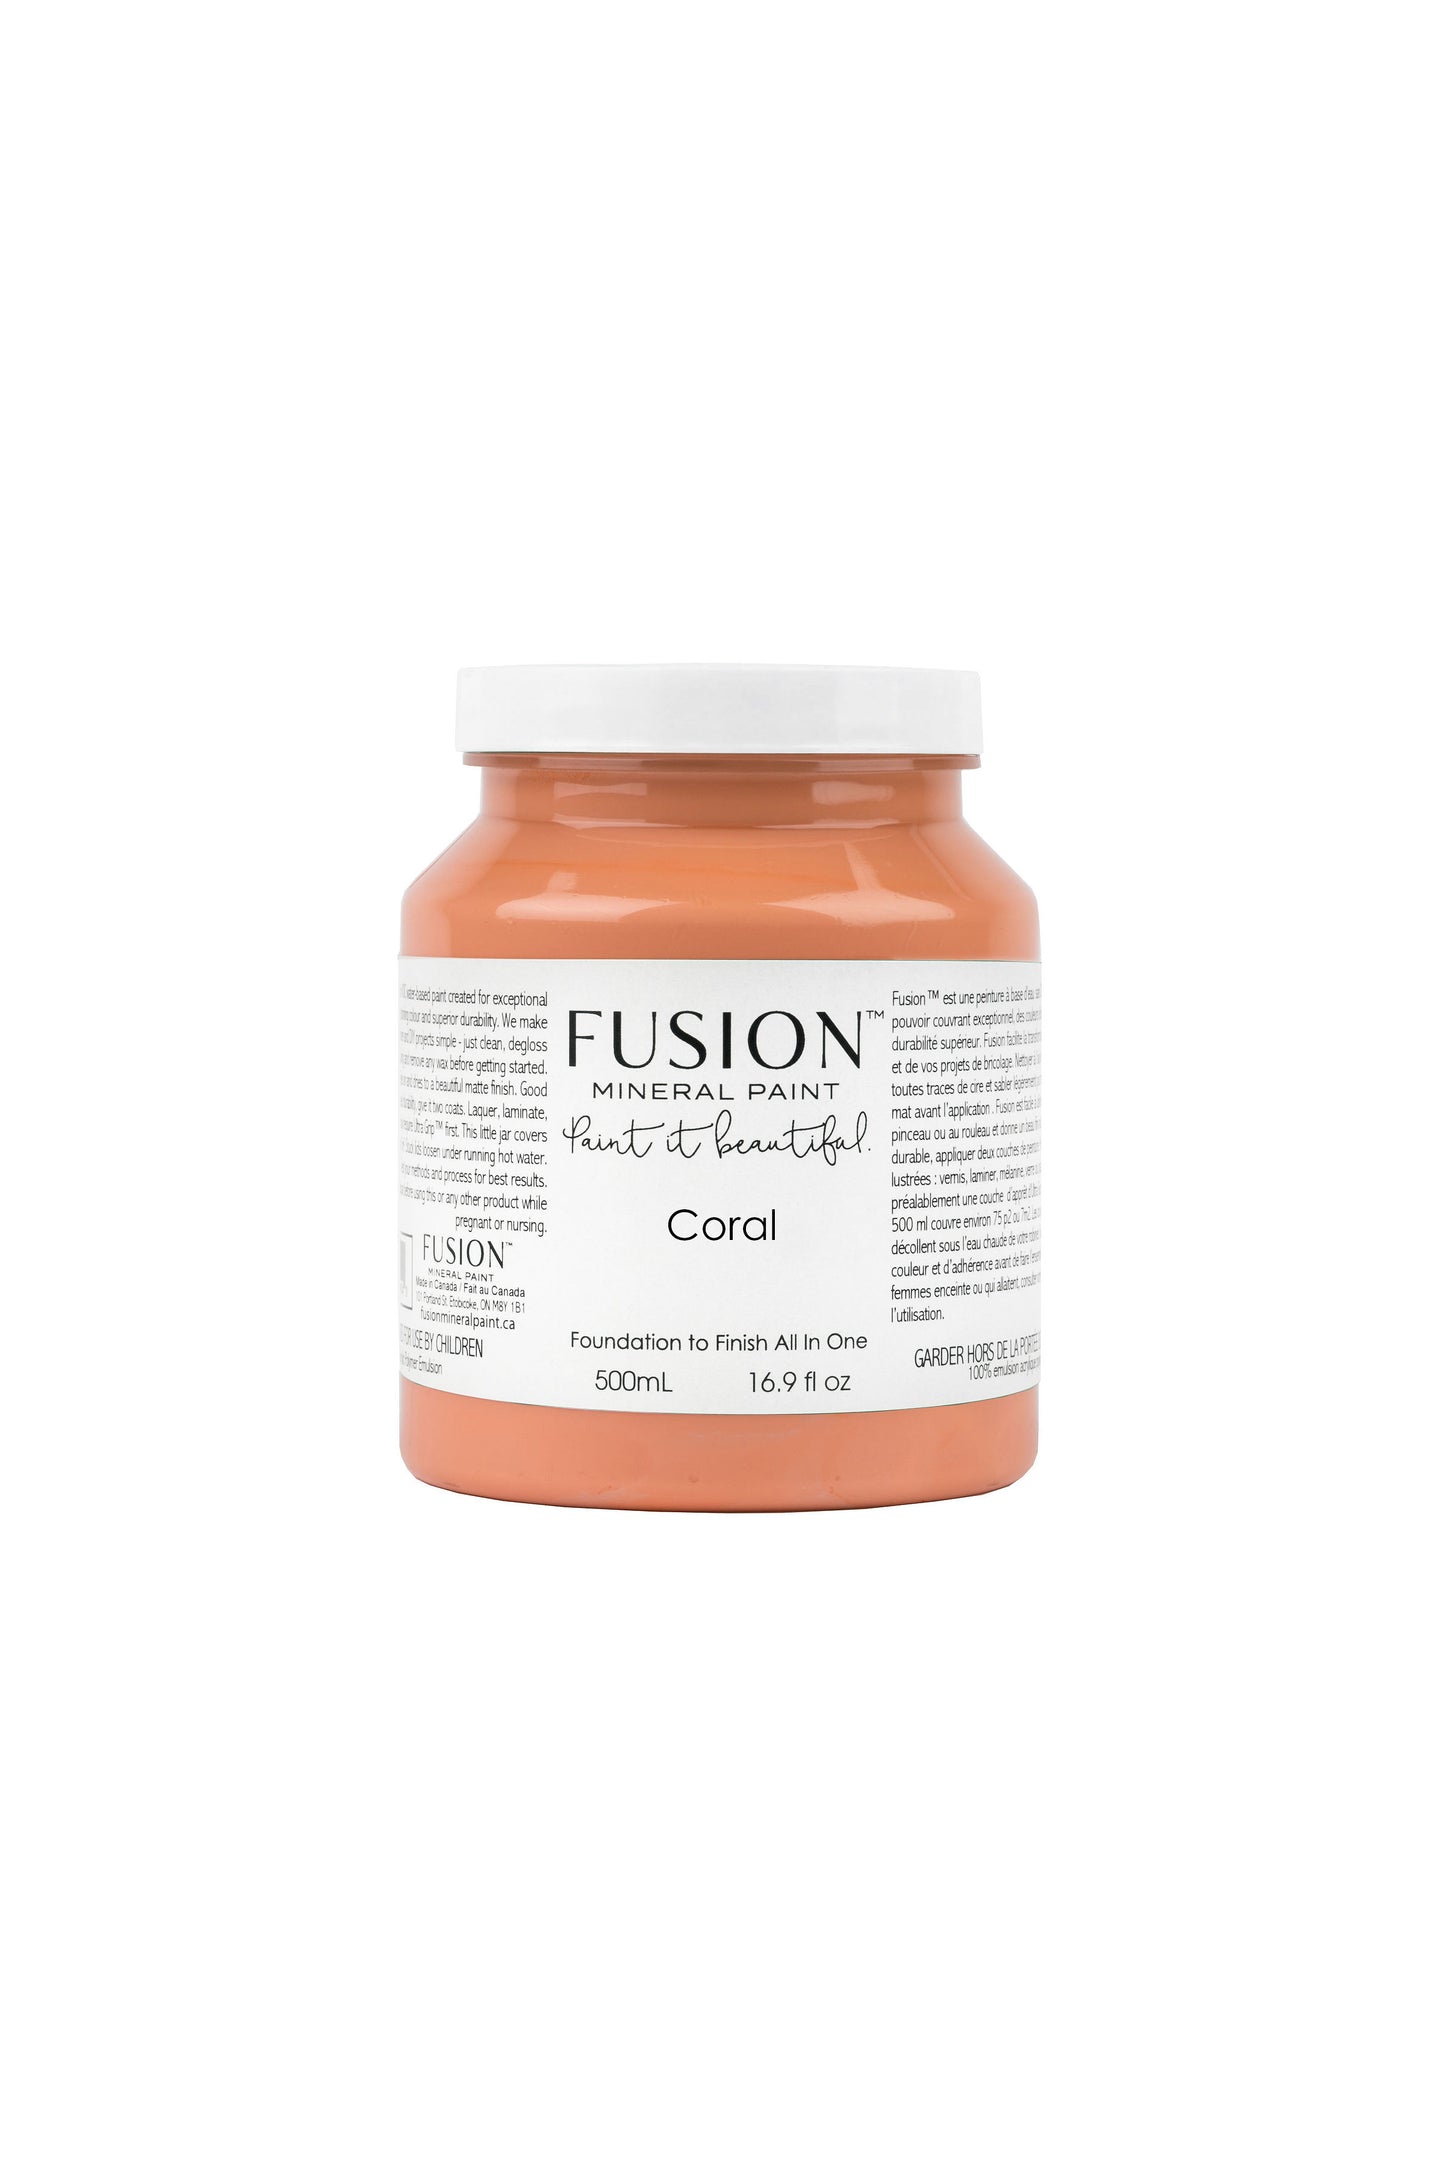 Coral Fusion Mineral Paint, Pink-Orange  Paint Color| 500ml Pint Size